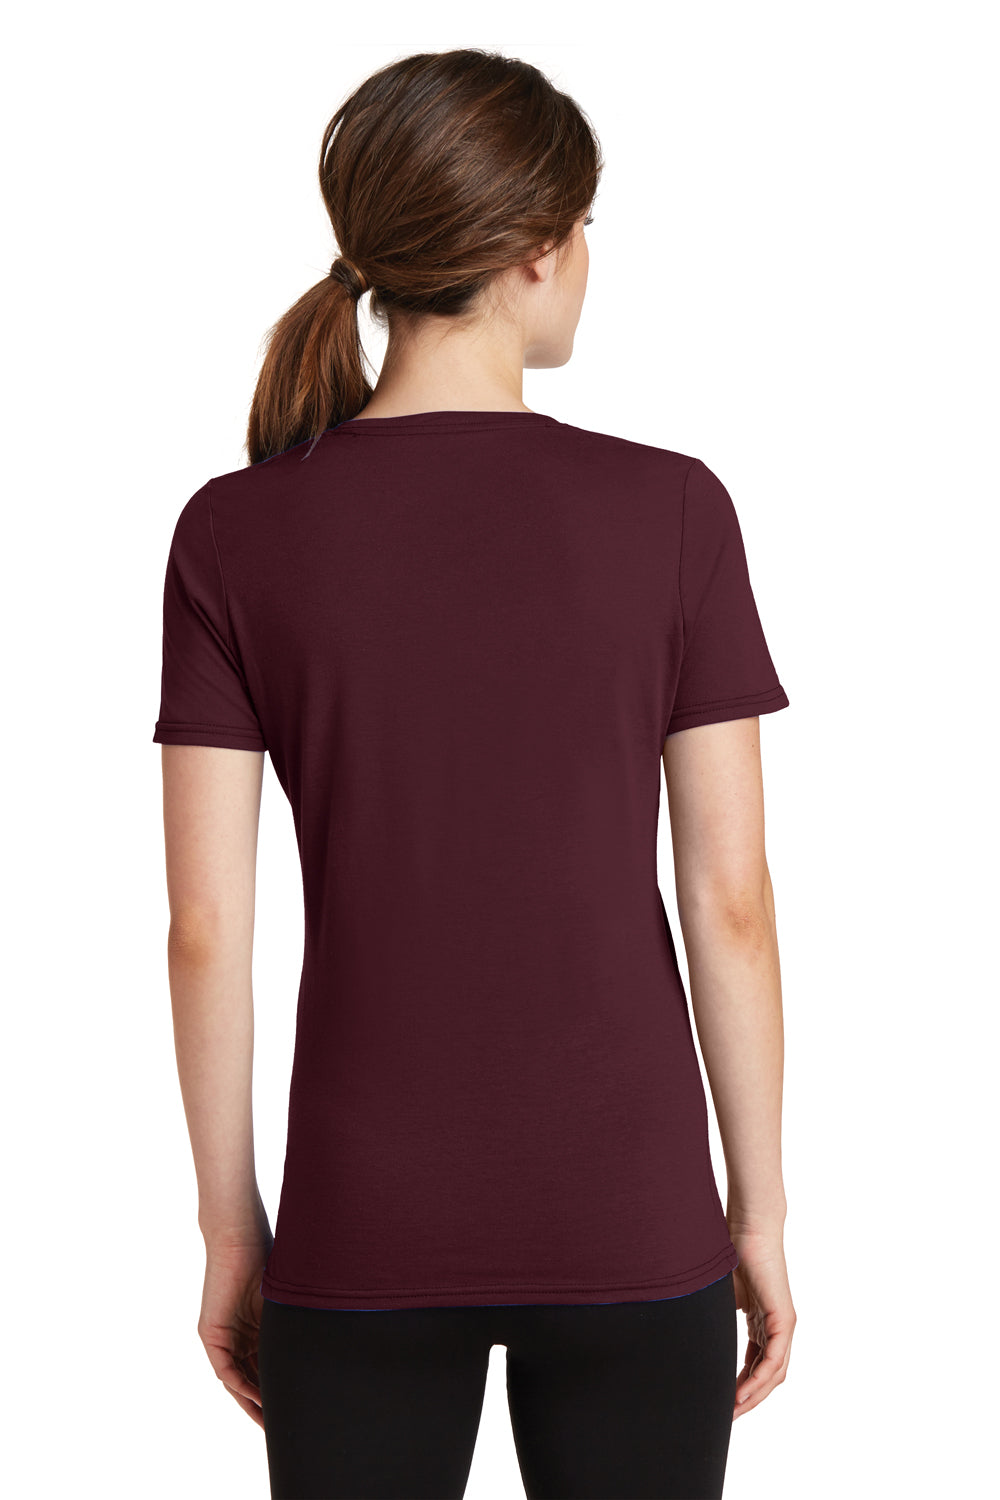 Port & Company LPC381V Womens Dry Zone Performance Moisture Wicking Short Sleeve V-Neck T-Shirt Maroon Back